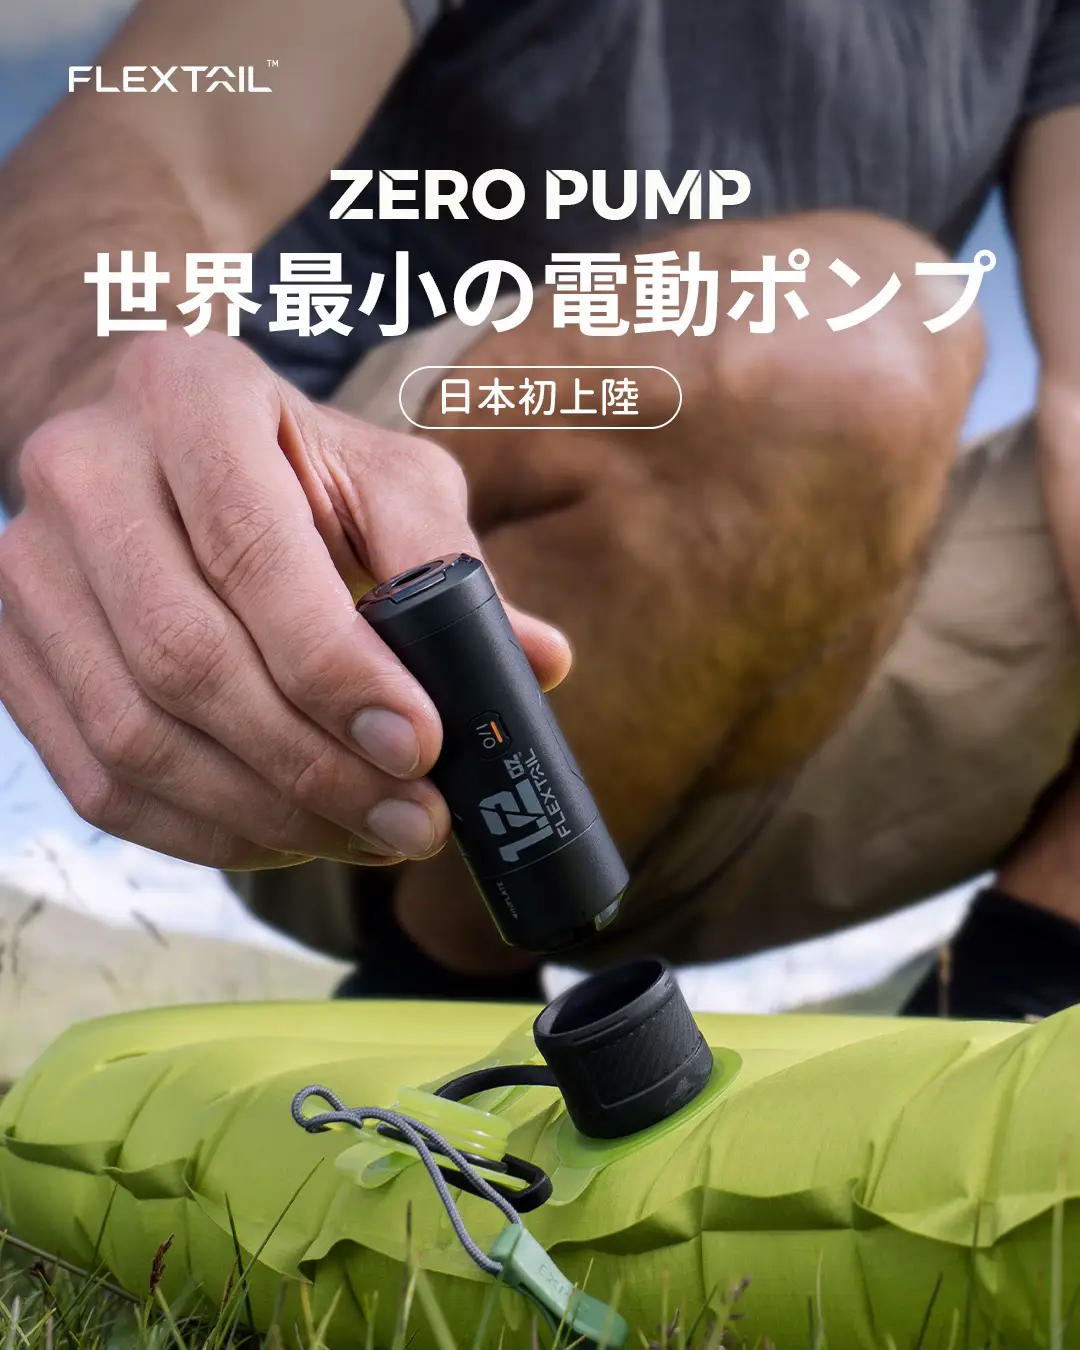 FLEXTAIL ZERO PUMP - World's Smallest Pump for Sleeping Pads